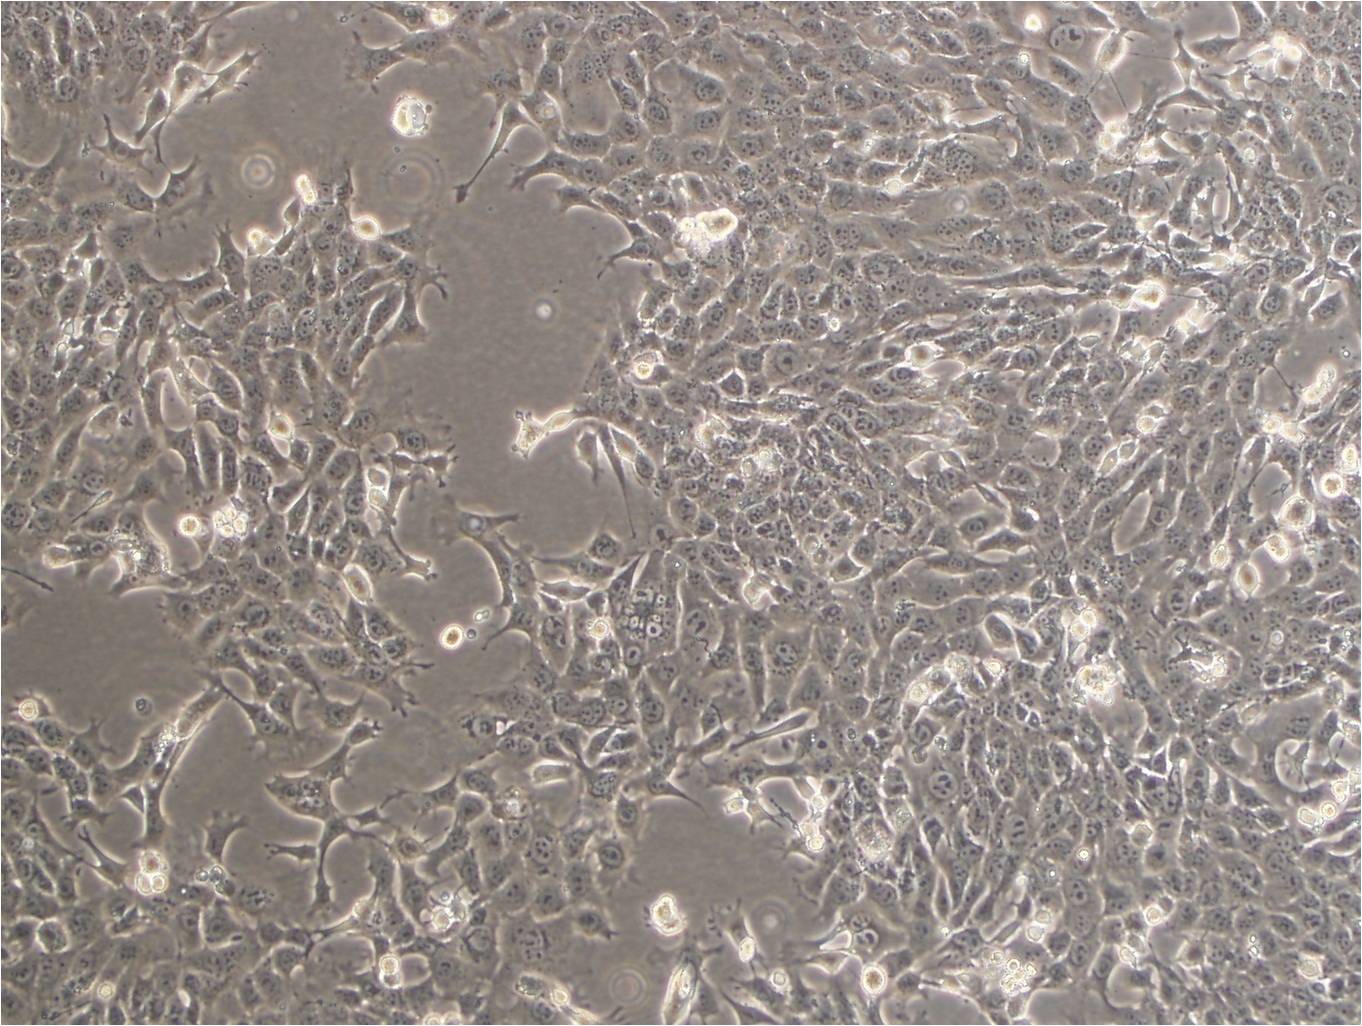 PC-10 epithelioid cells人肺鳞癌细胞系